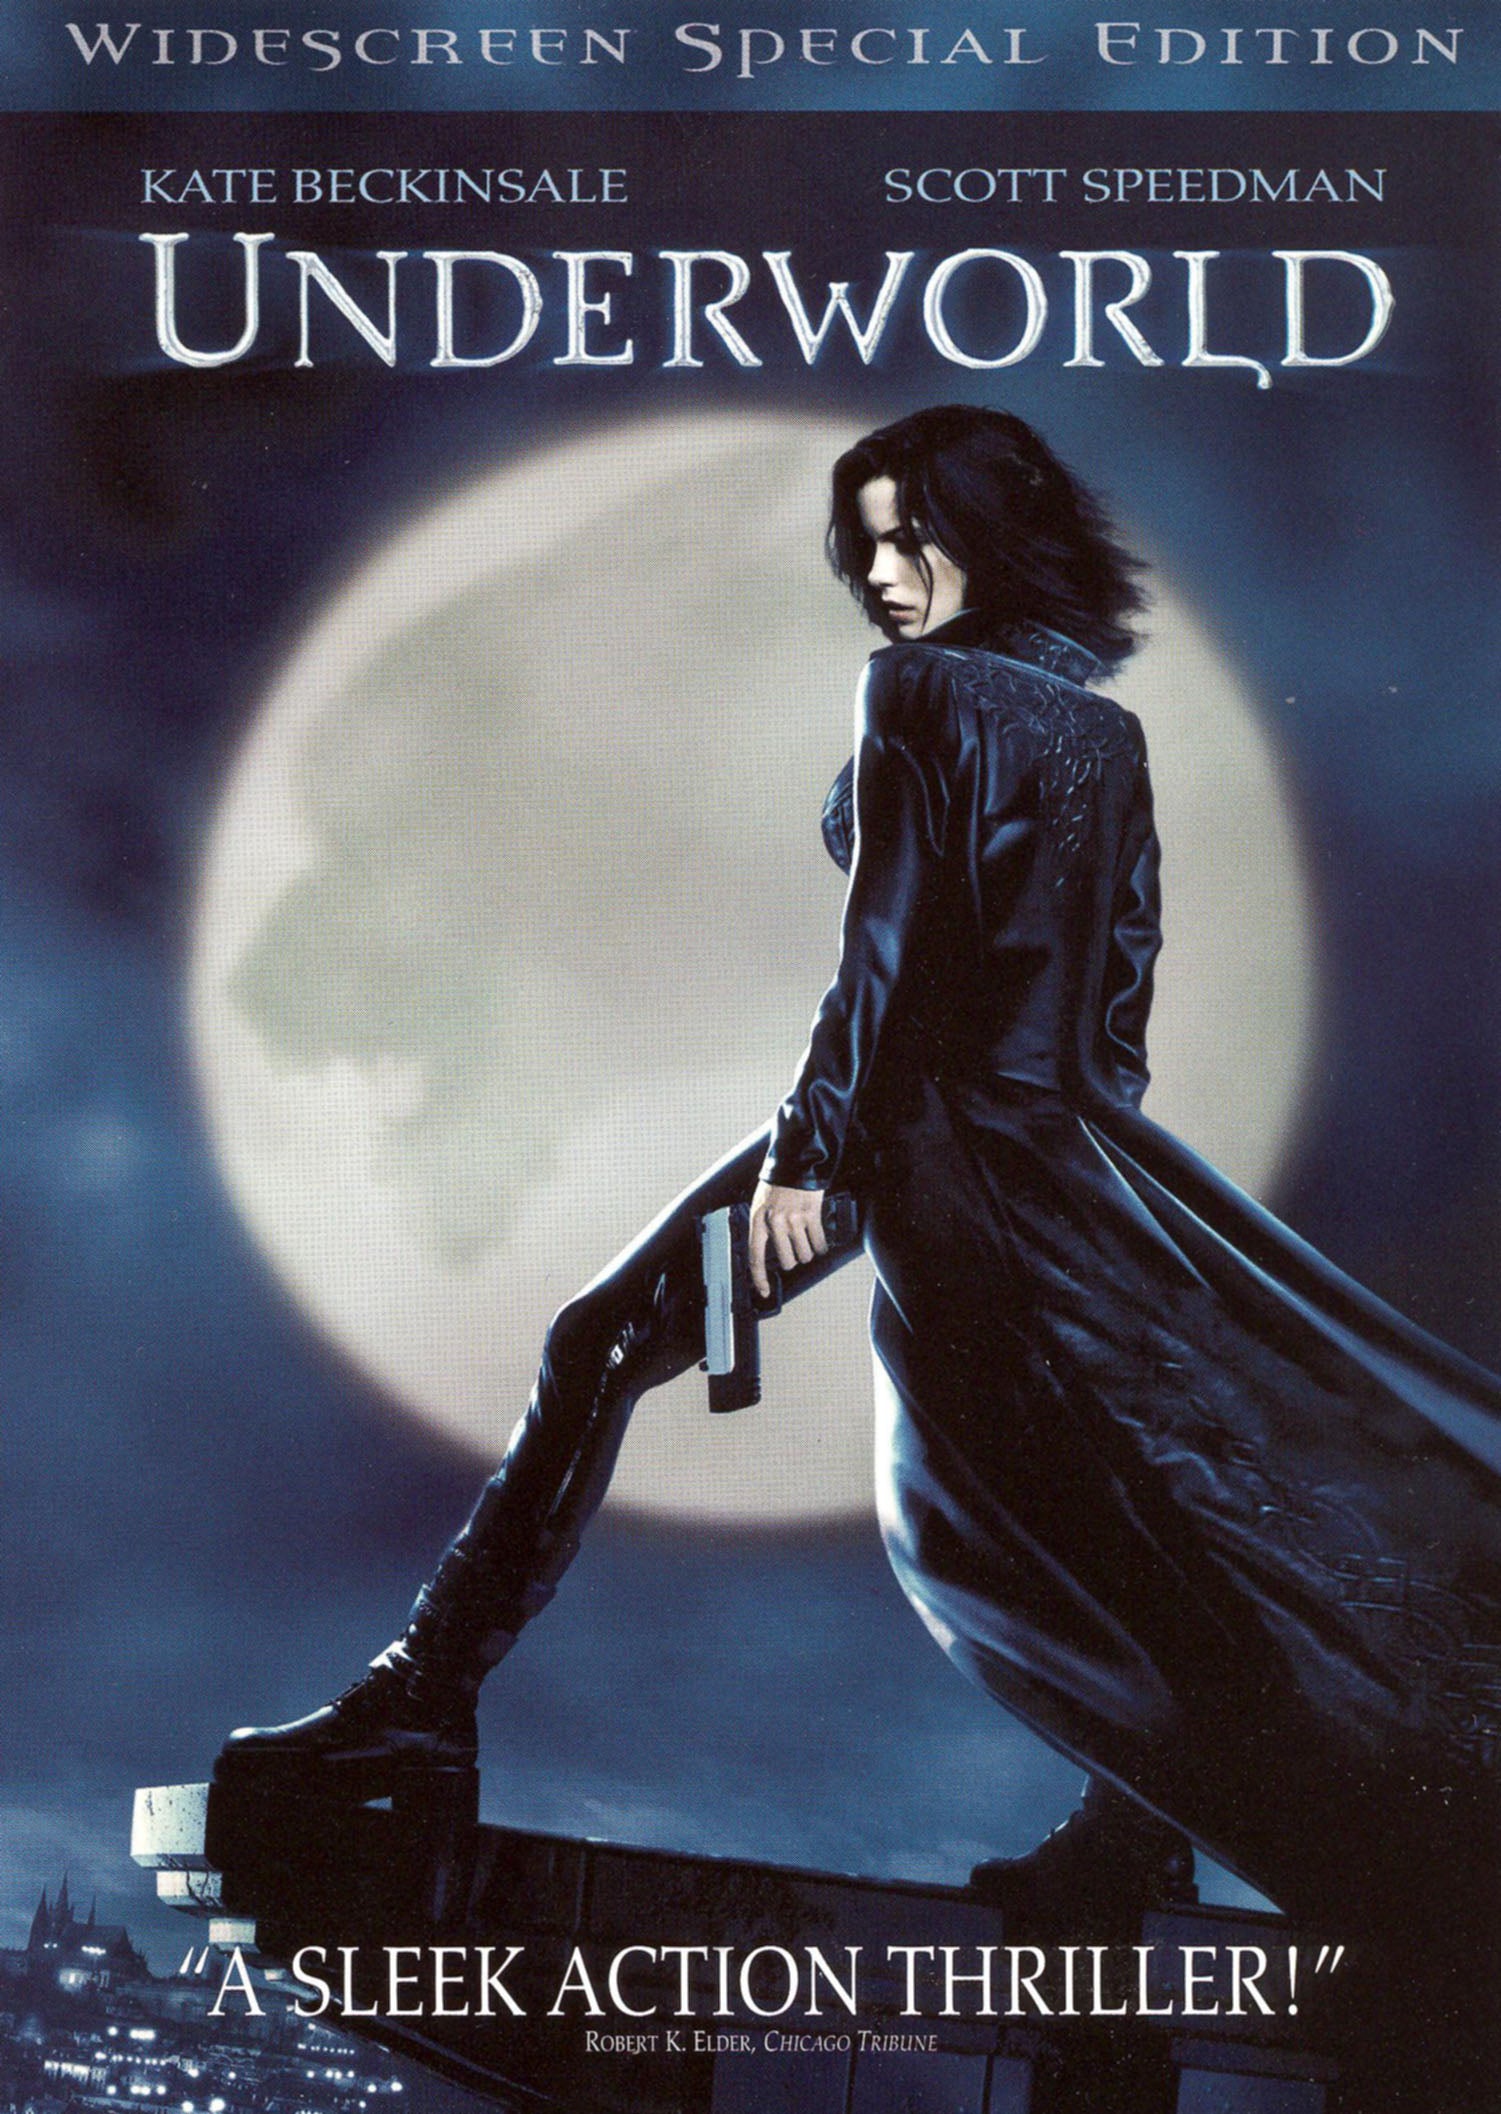 Underworld [WS] [Special Edition] cover art